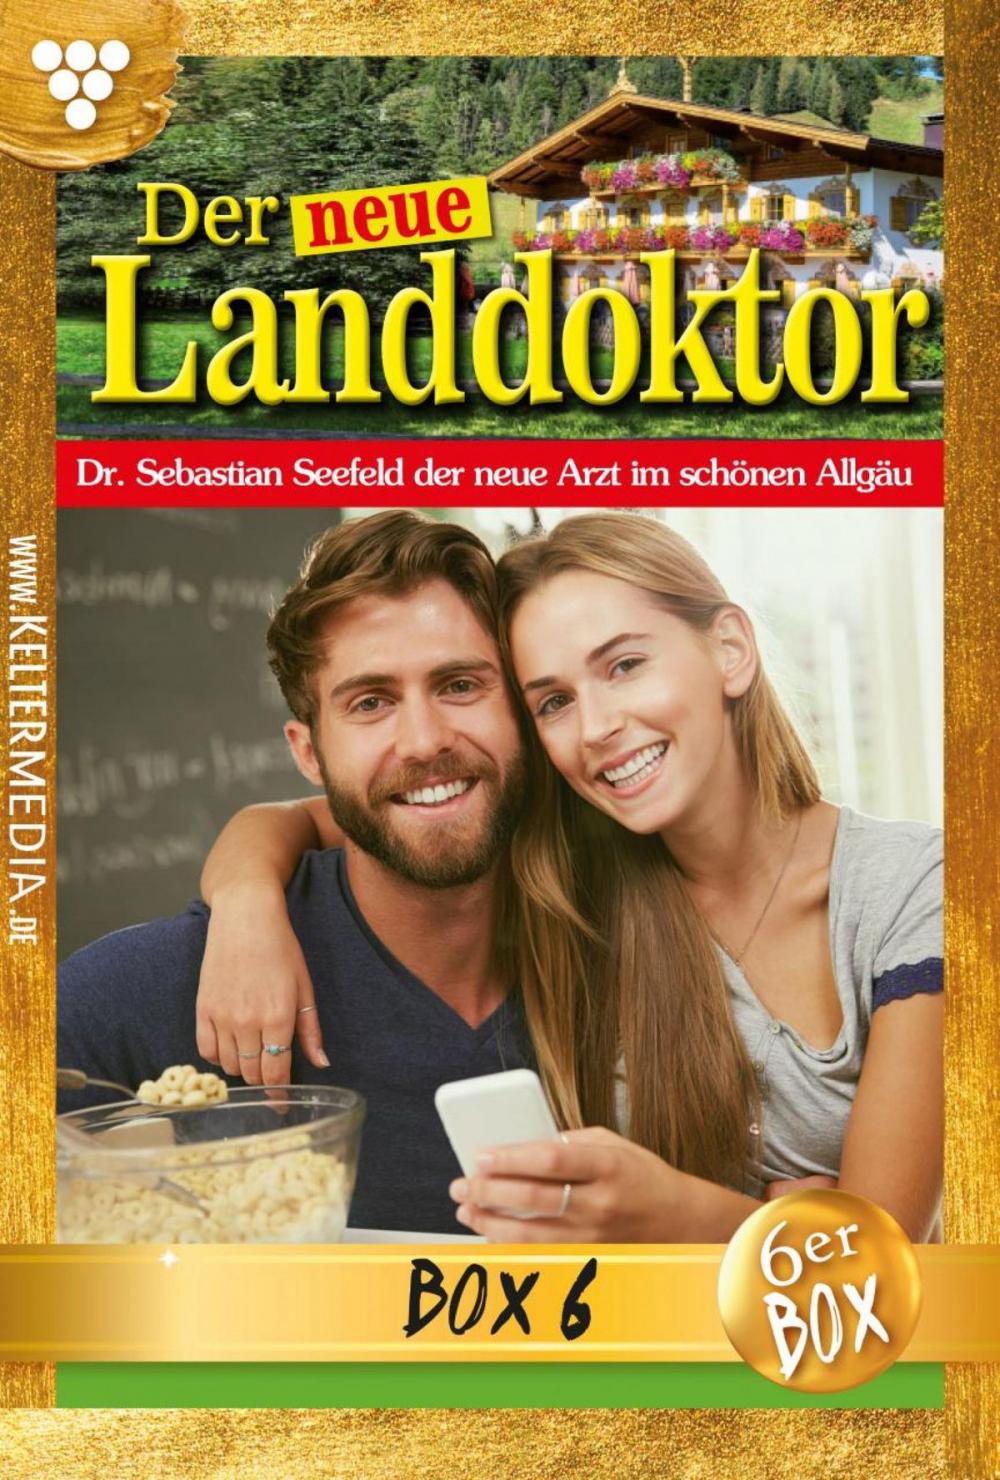 Big bigCover of Der neue Landdoktor Jubiläumsbox 6 – Arztroman